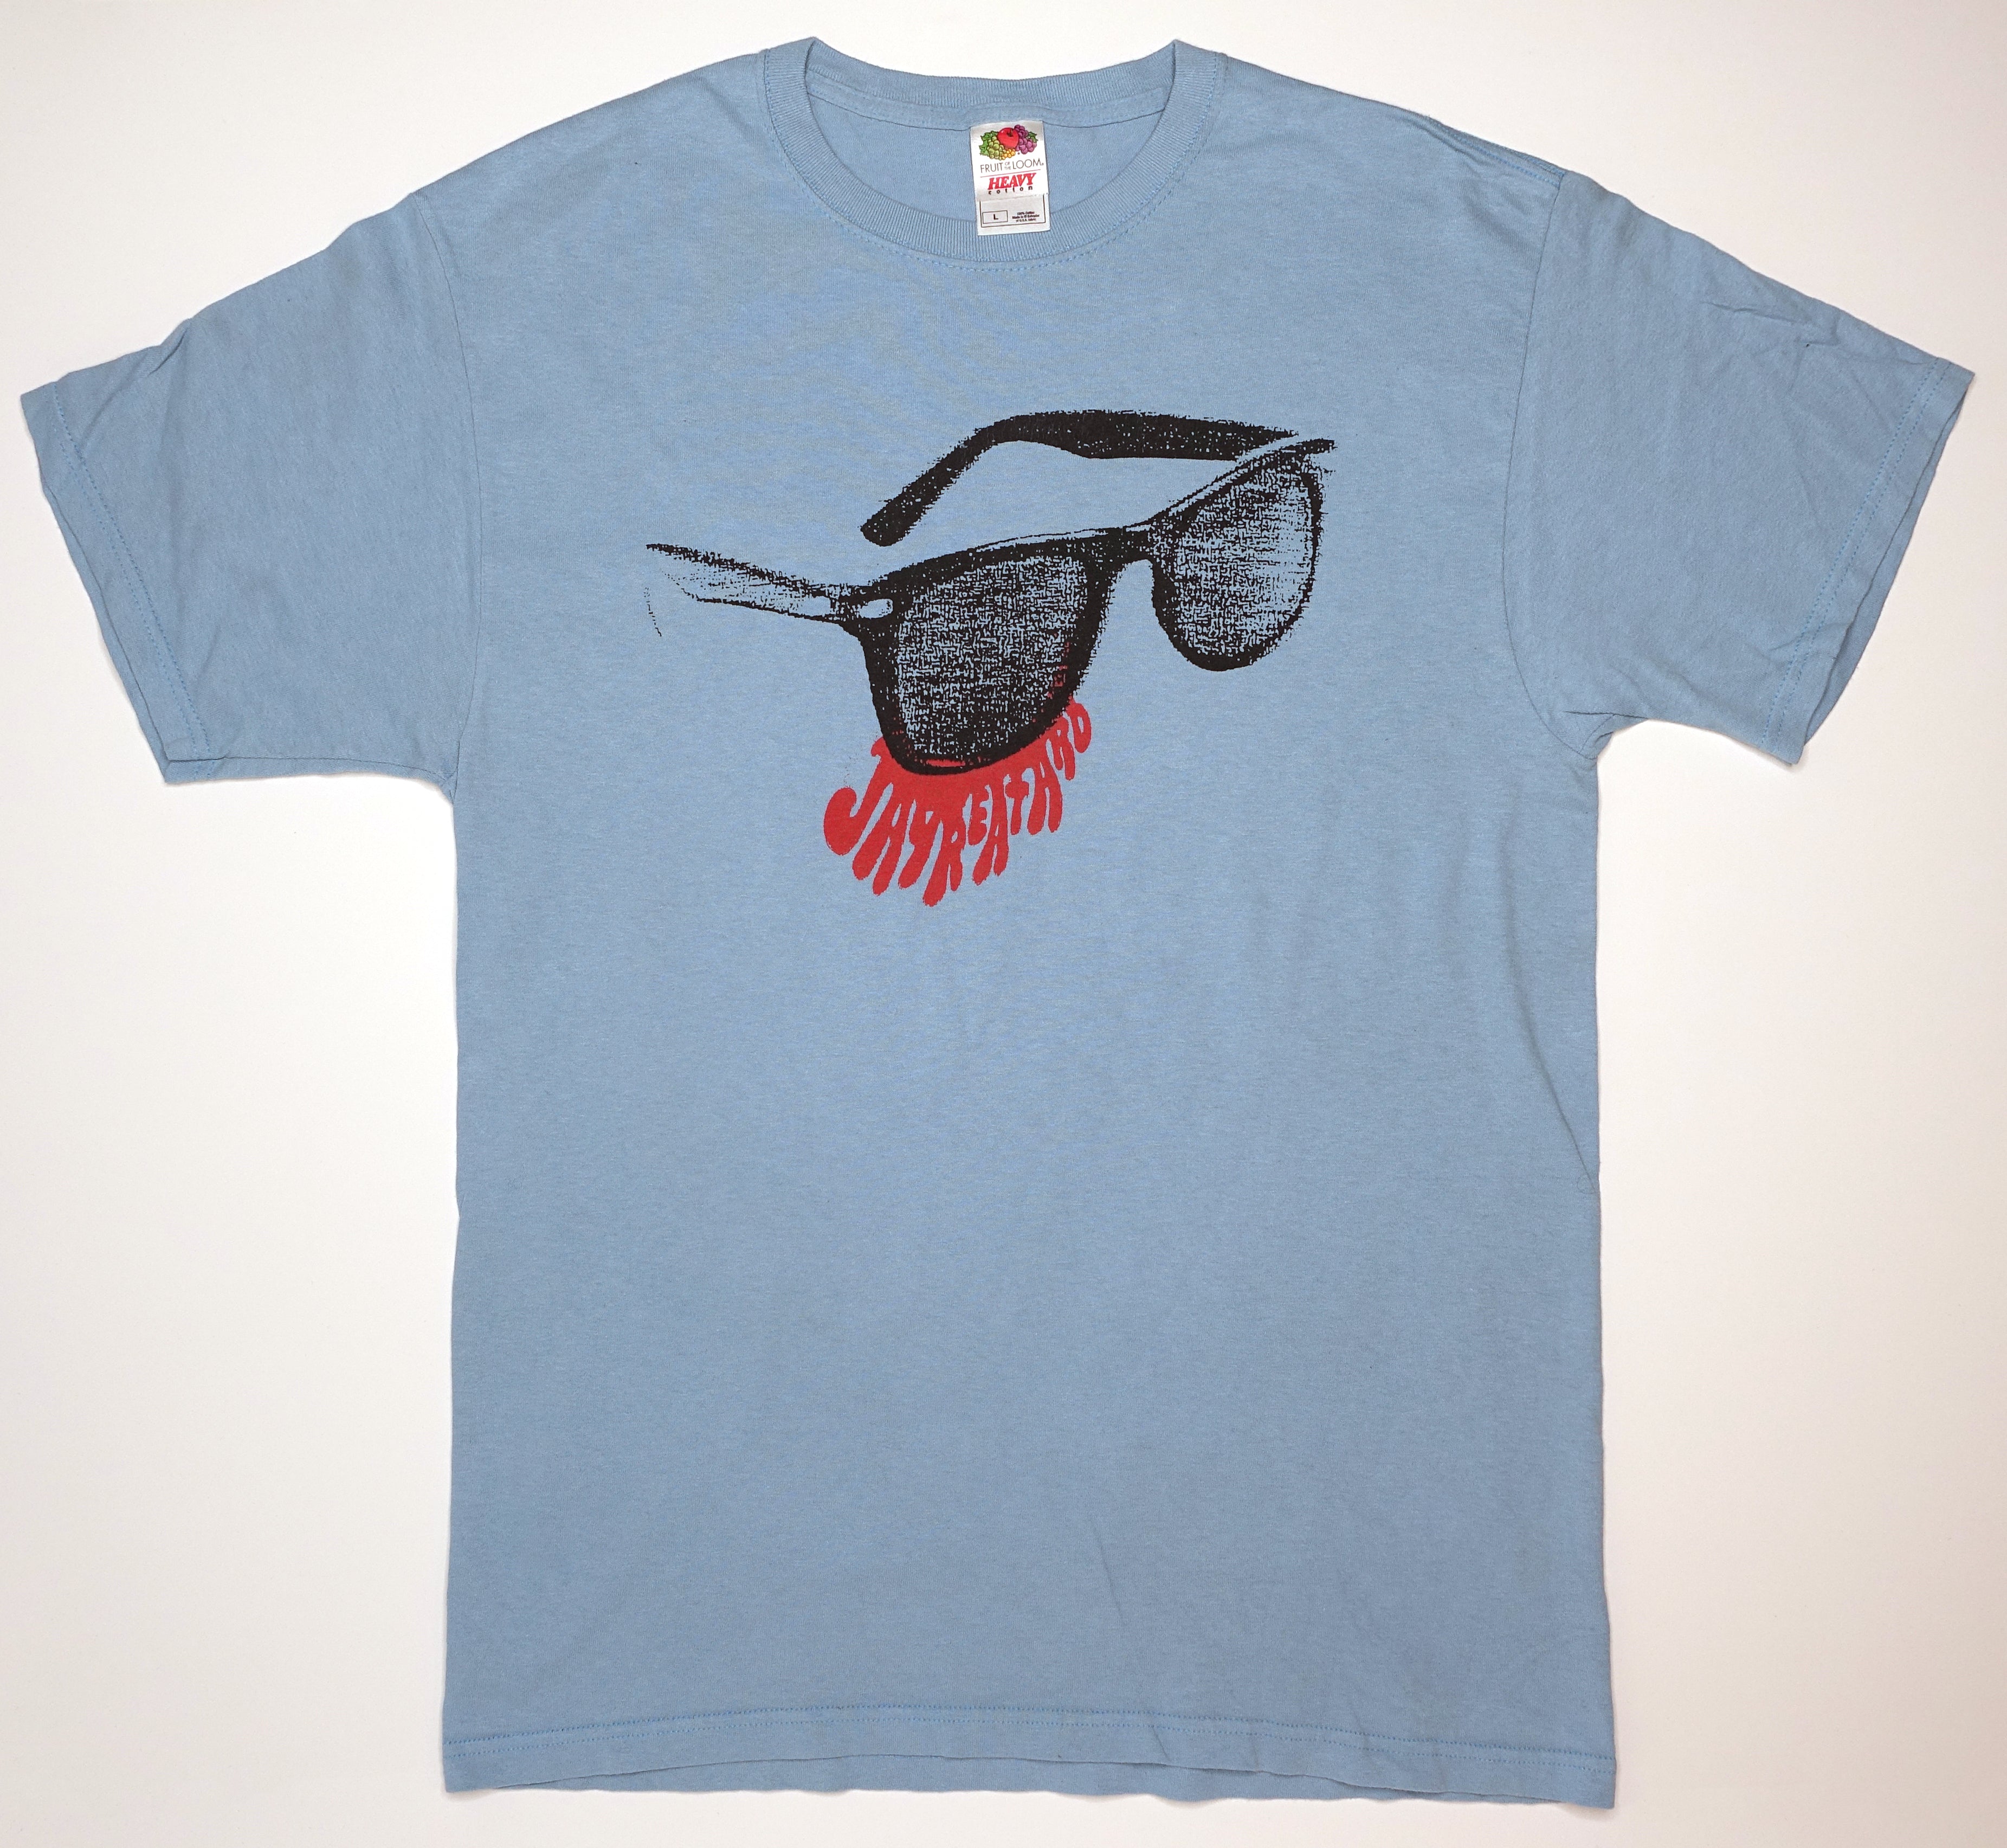 Jay Reatard - Blood Shades 2006 Tour Shirt Size Large